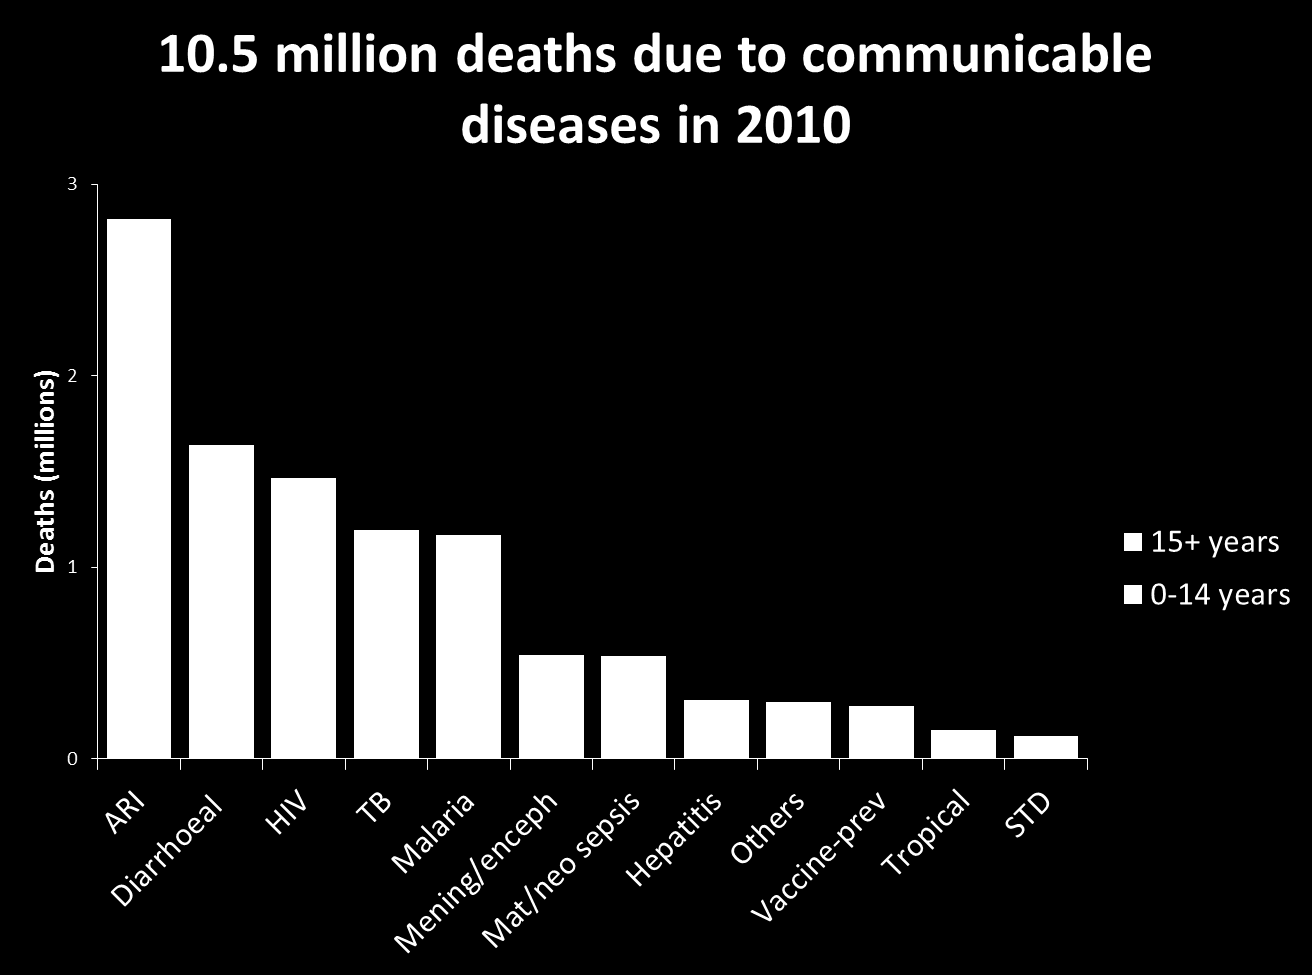 Global Burden of Disease 2010 http://ghdx.